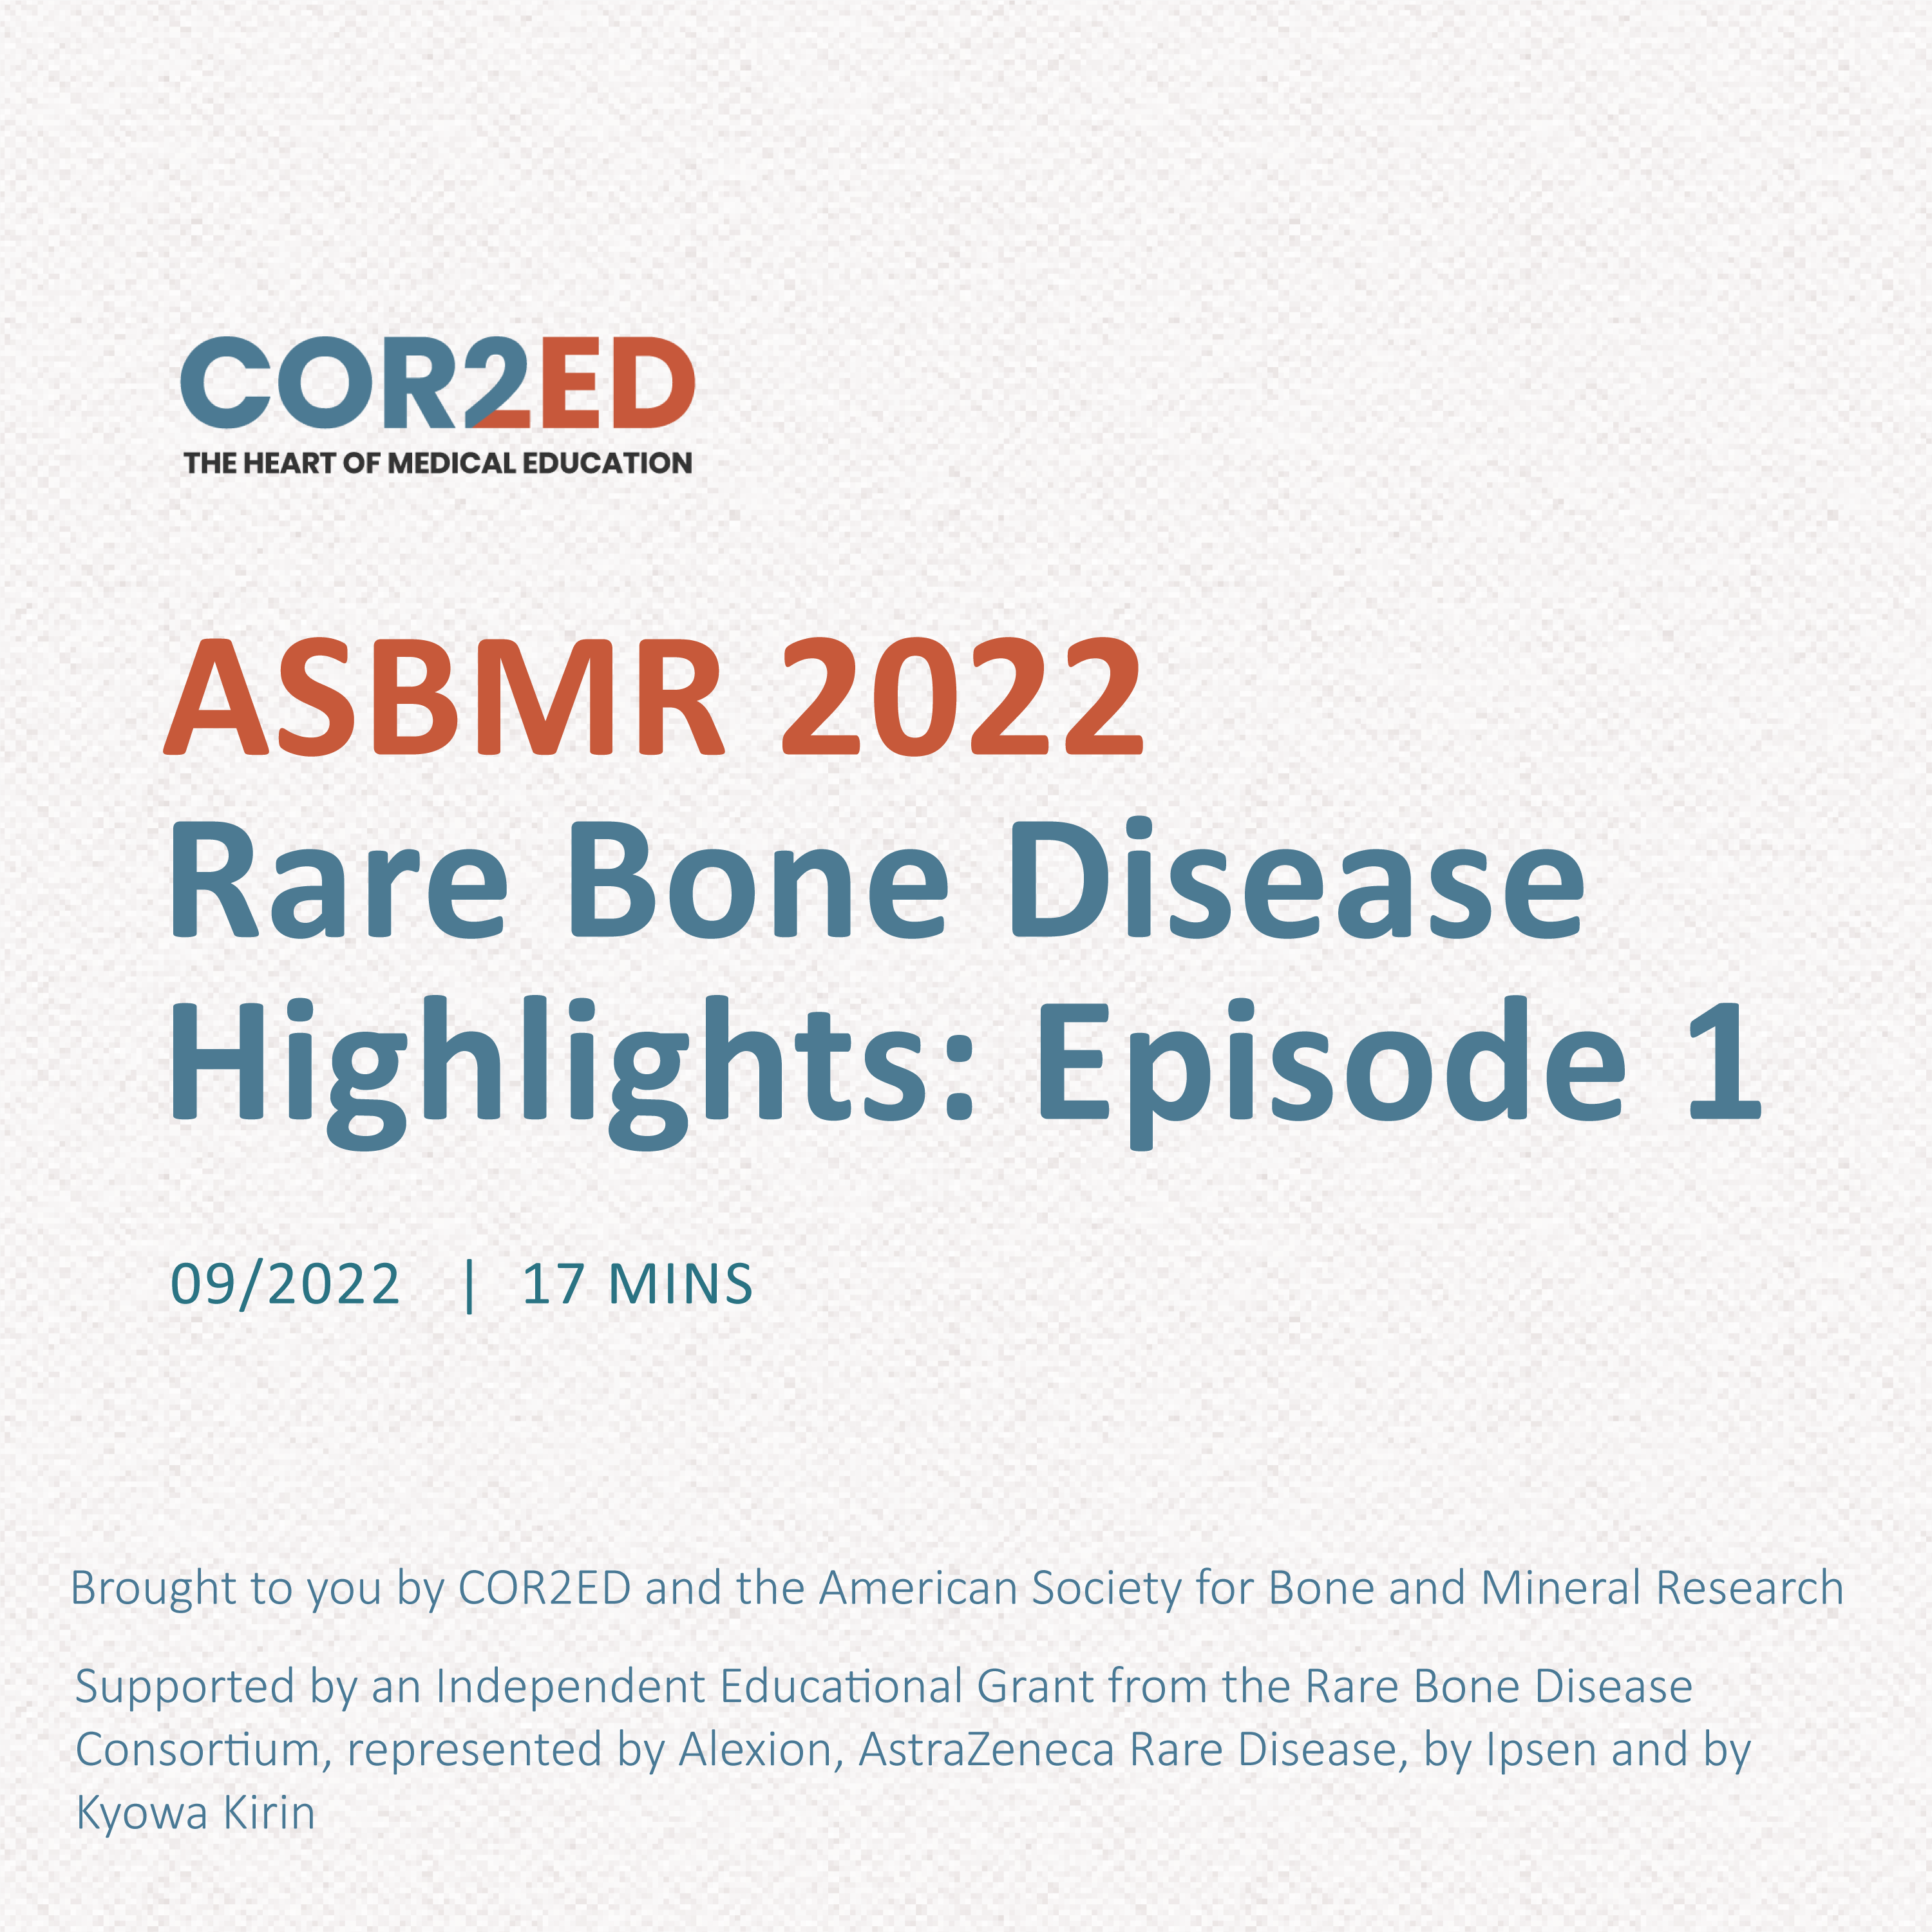 ASBMR 2022 Rare Bone Disease Highlights: Episode 1